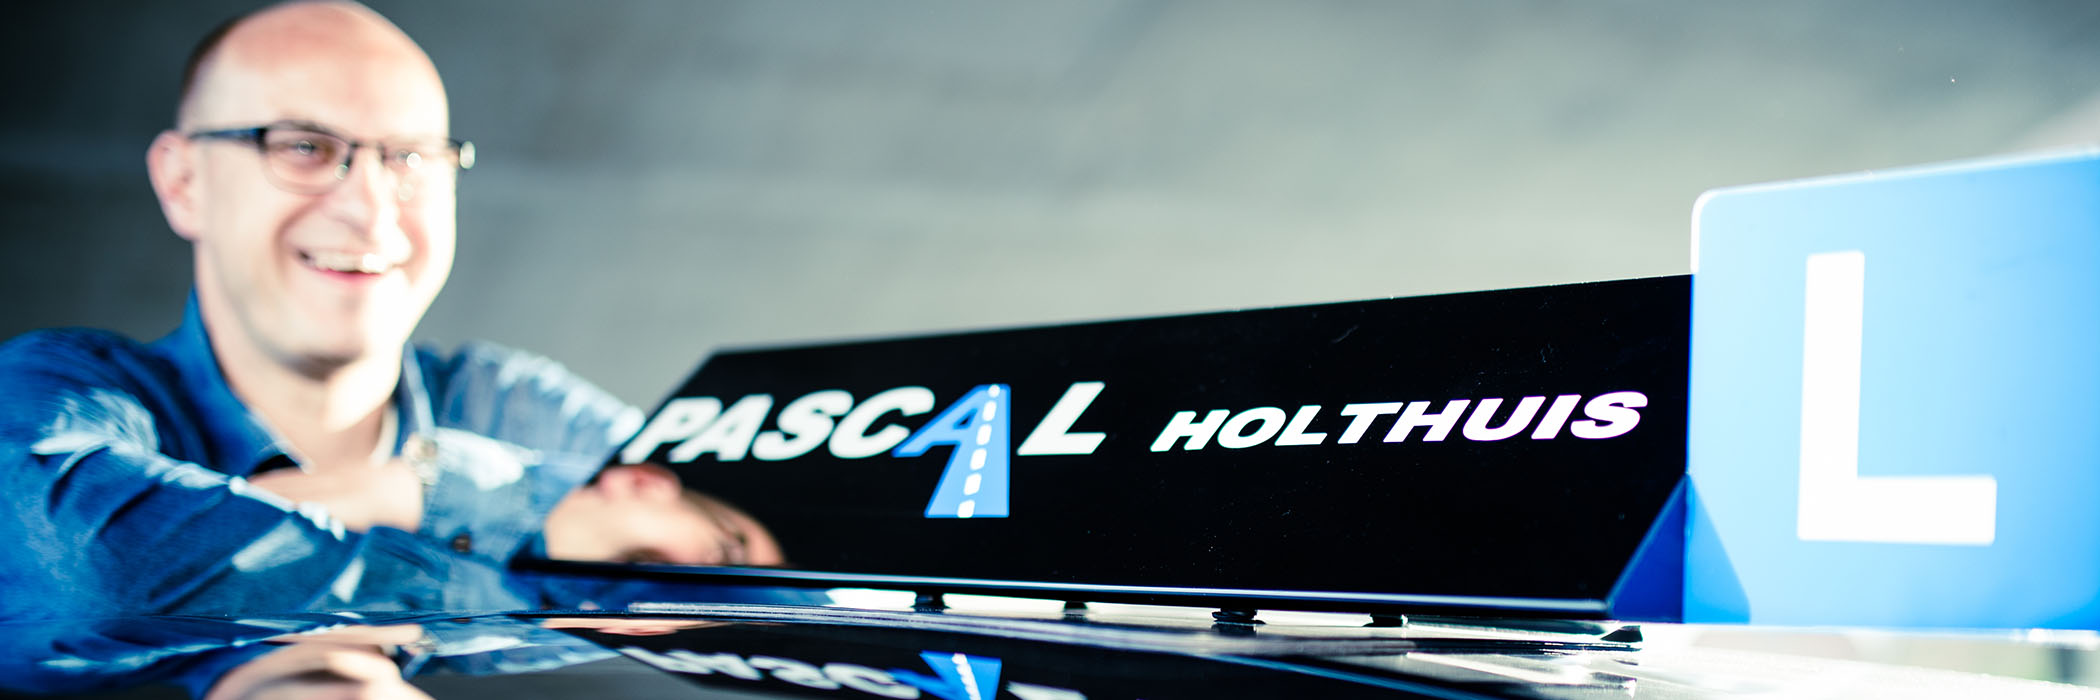 Pascal Holthuis naast zijn auto met het rijles bord